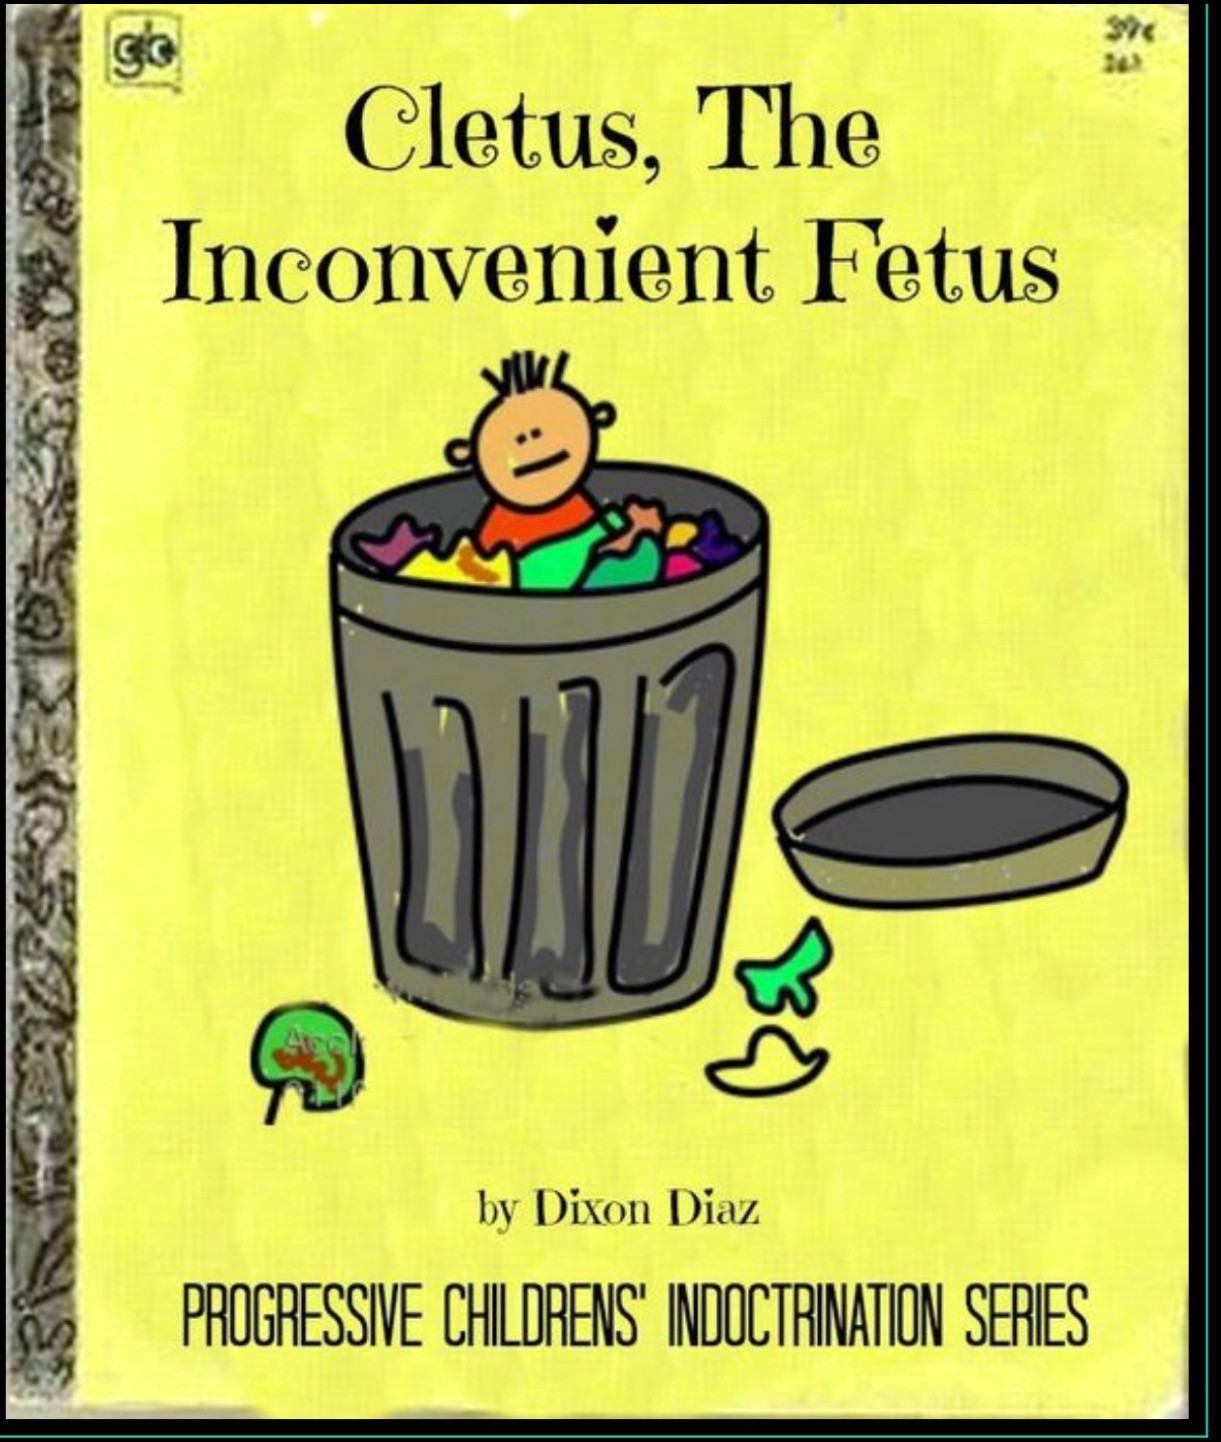 trash kid - Cletus, The Inconvenient Fetus by Dixon Diaz Progressive Childrens' Indoctrination Series